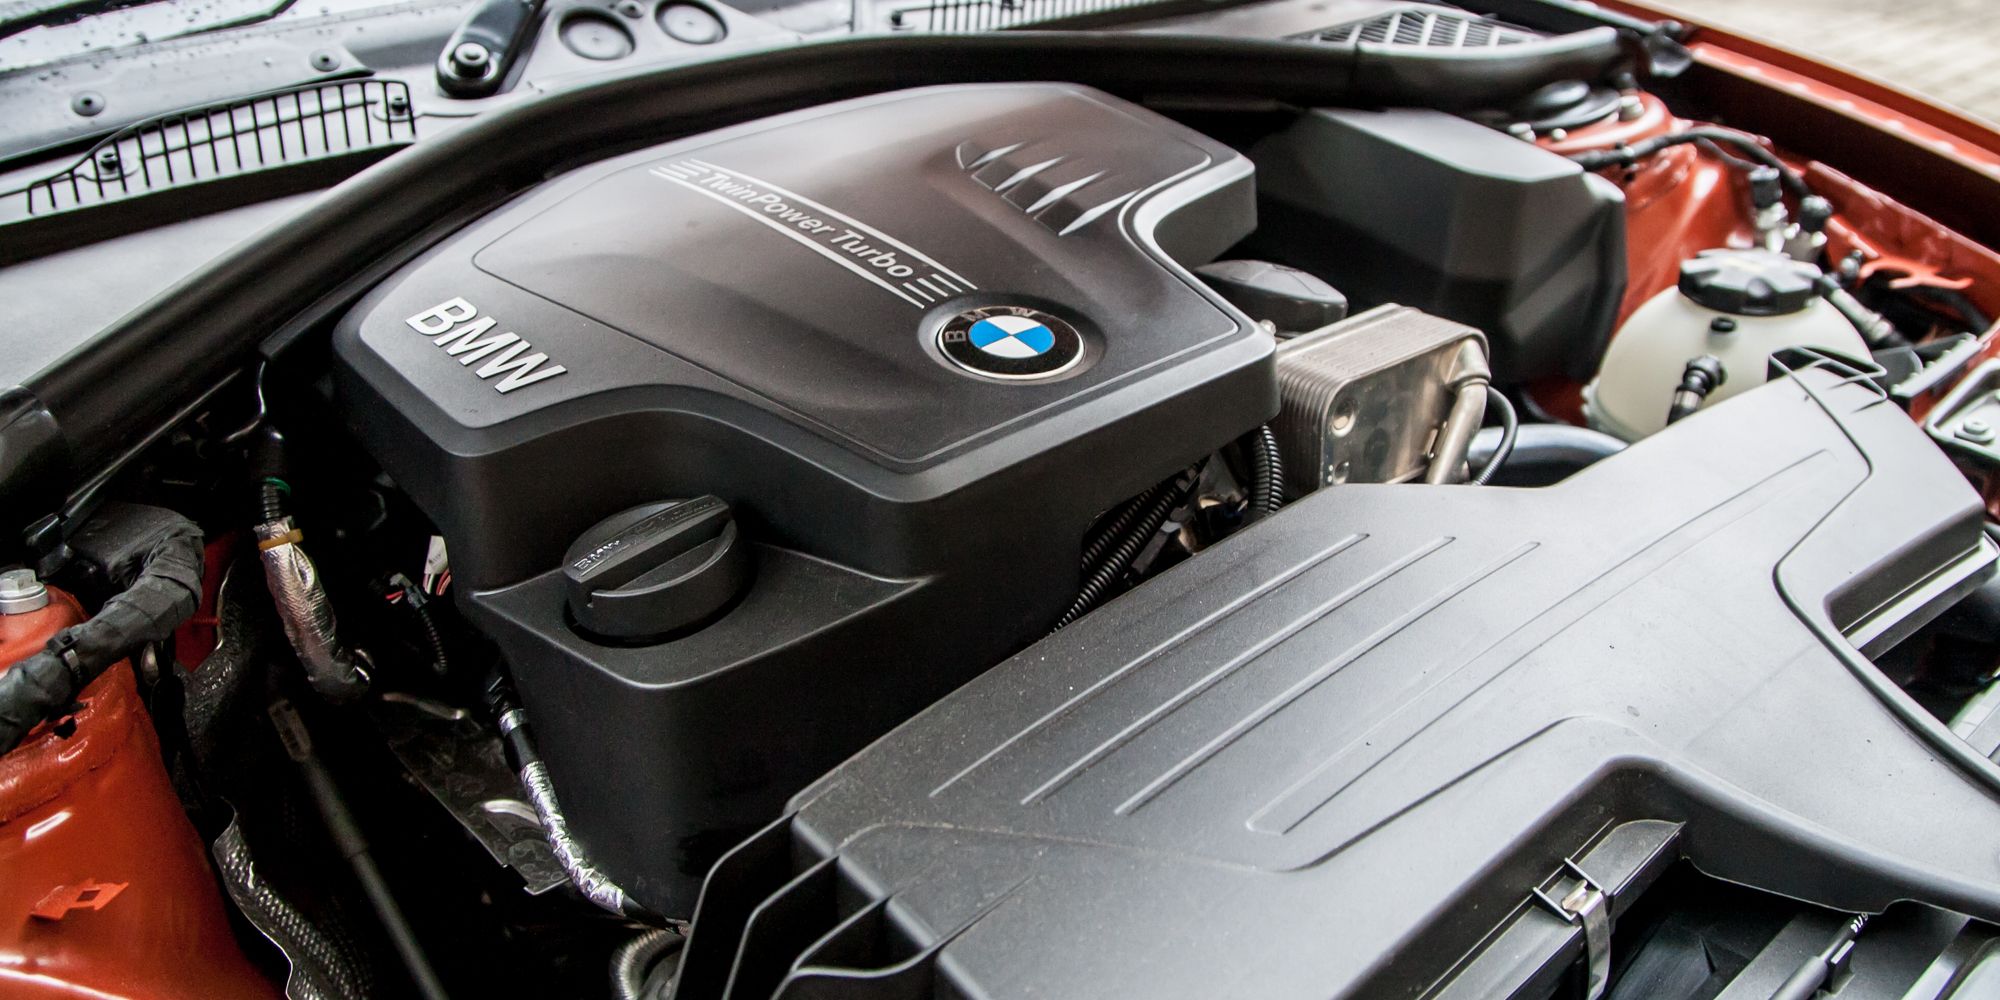 2015 Bmw 125i Turbocharged 2 0 Liter Engine (View 6 of 15)